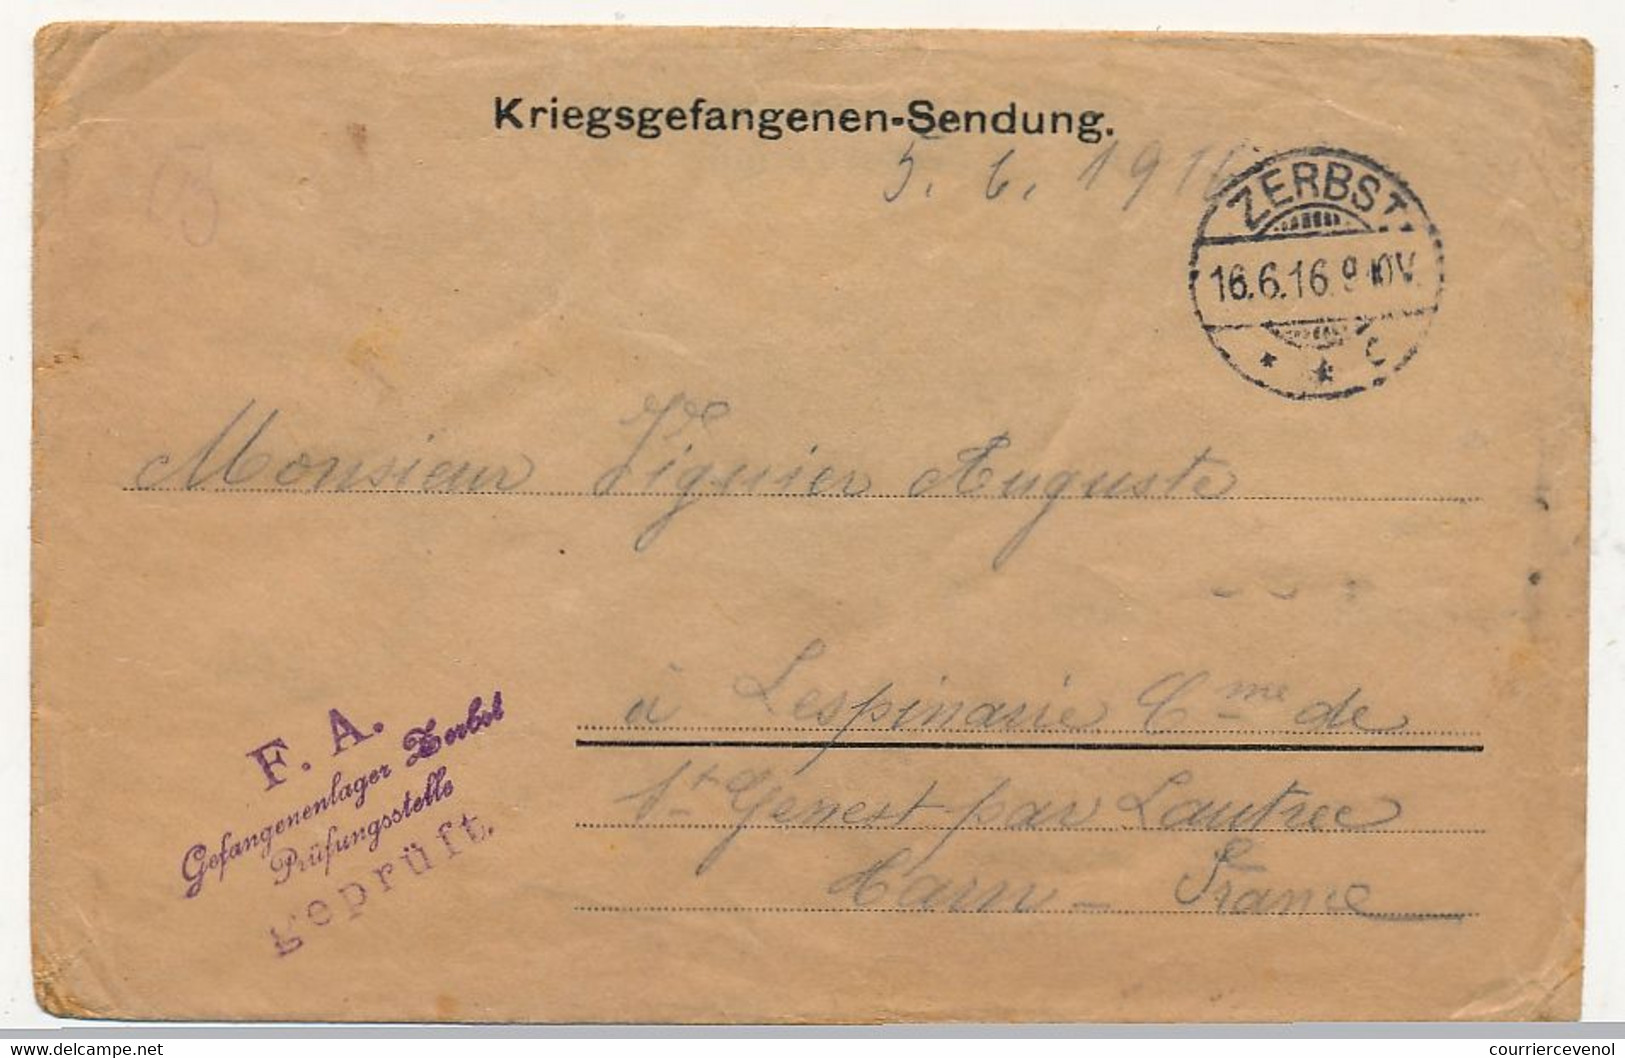 Enveloppe Prisonnier Français - Camp De Zerbst (Anh) - 16/6/1916 - Bilingue Russe / Français - Censure - WW I